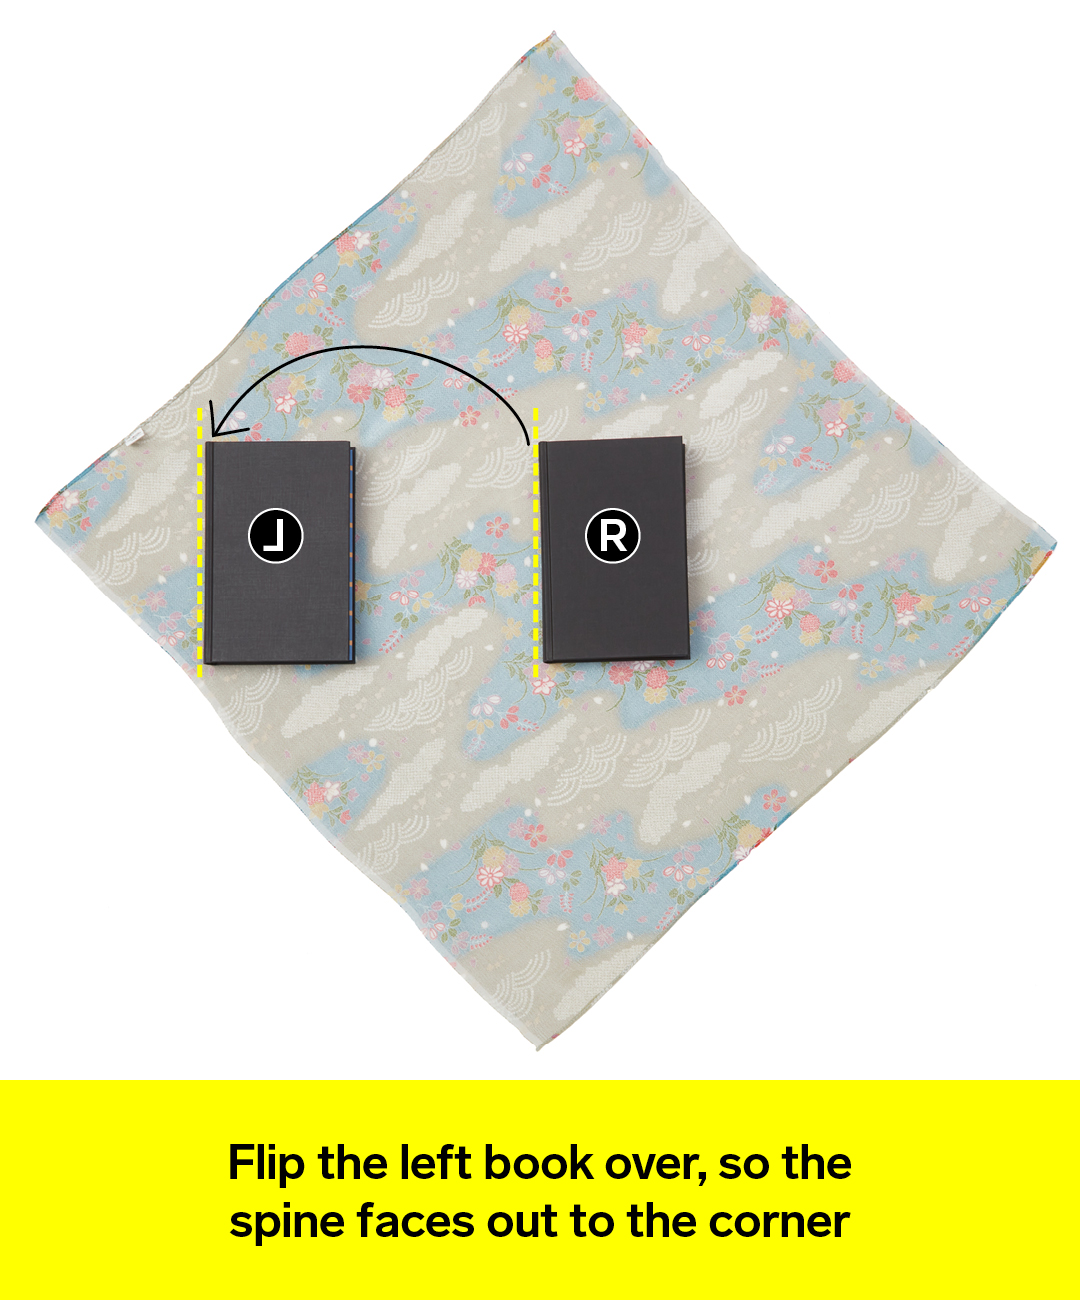 Graphic describing how to wrap books furoshiki style 